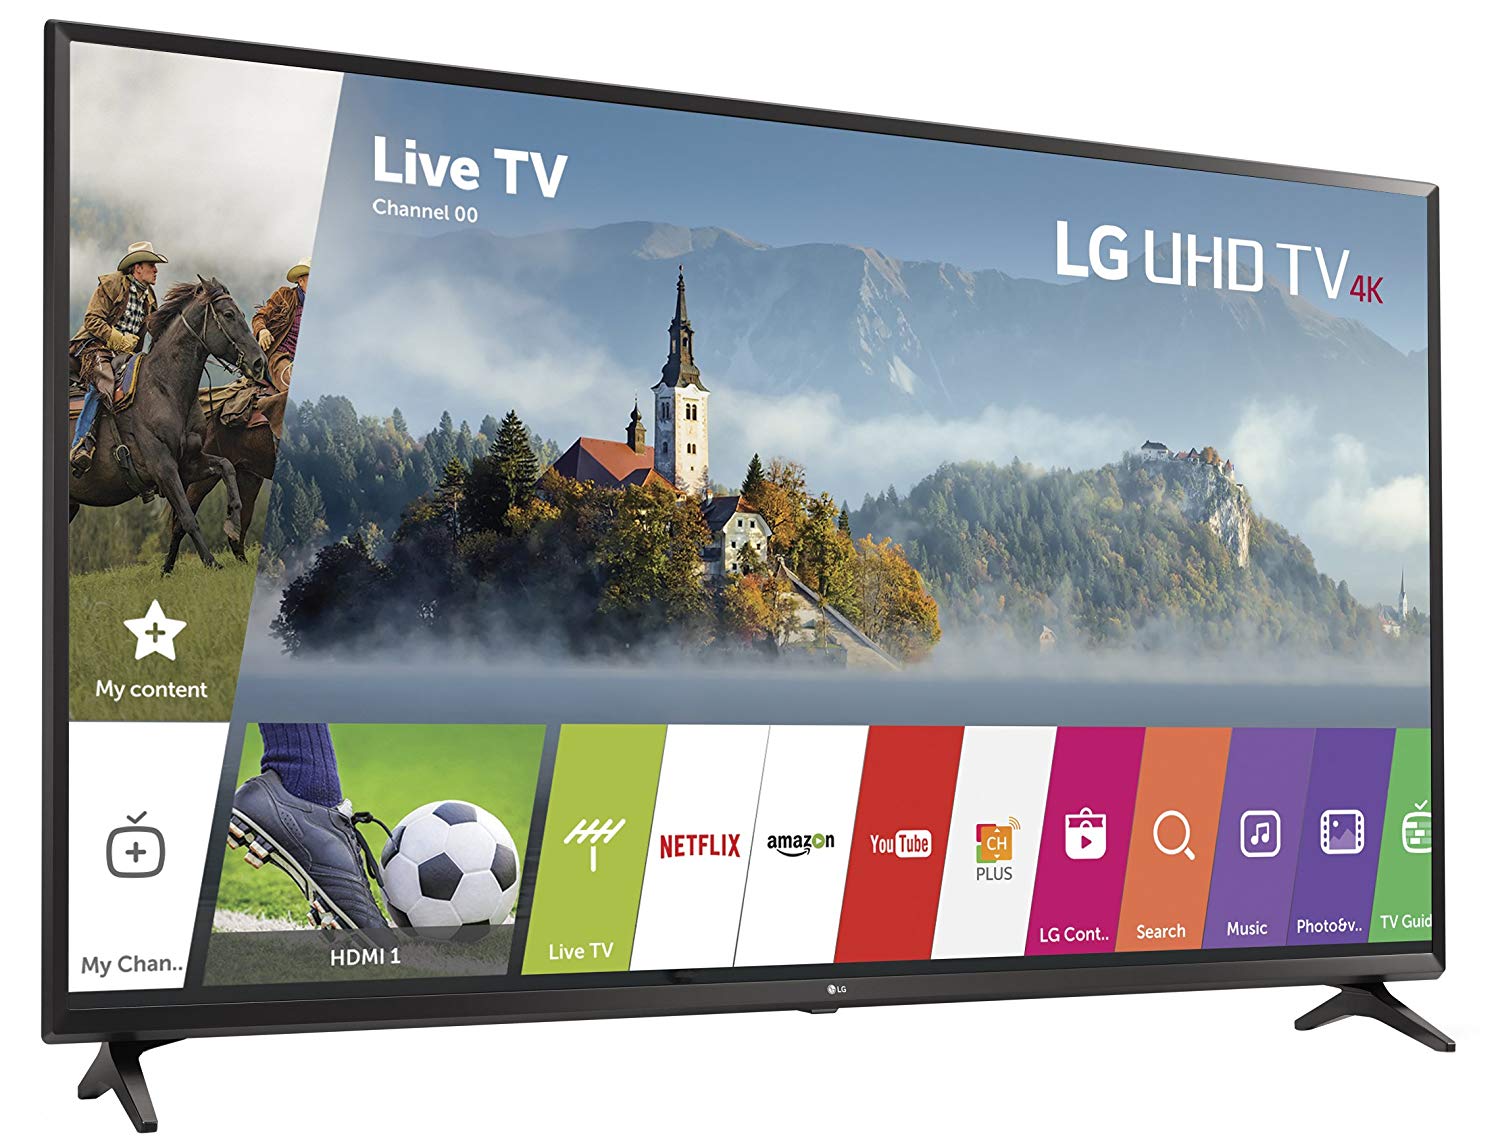 LG Elektronik 65UJ6300 65-Zoll 4K Ultra HD Smart LED-Fernseher (Modell 2017)